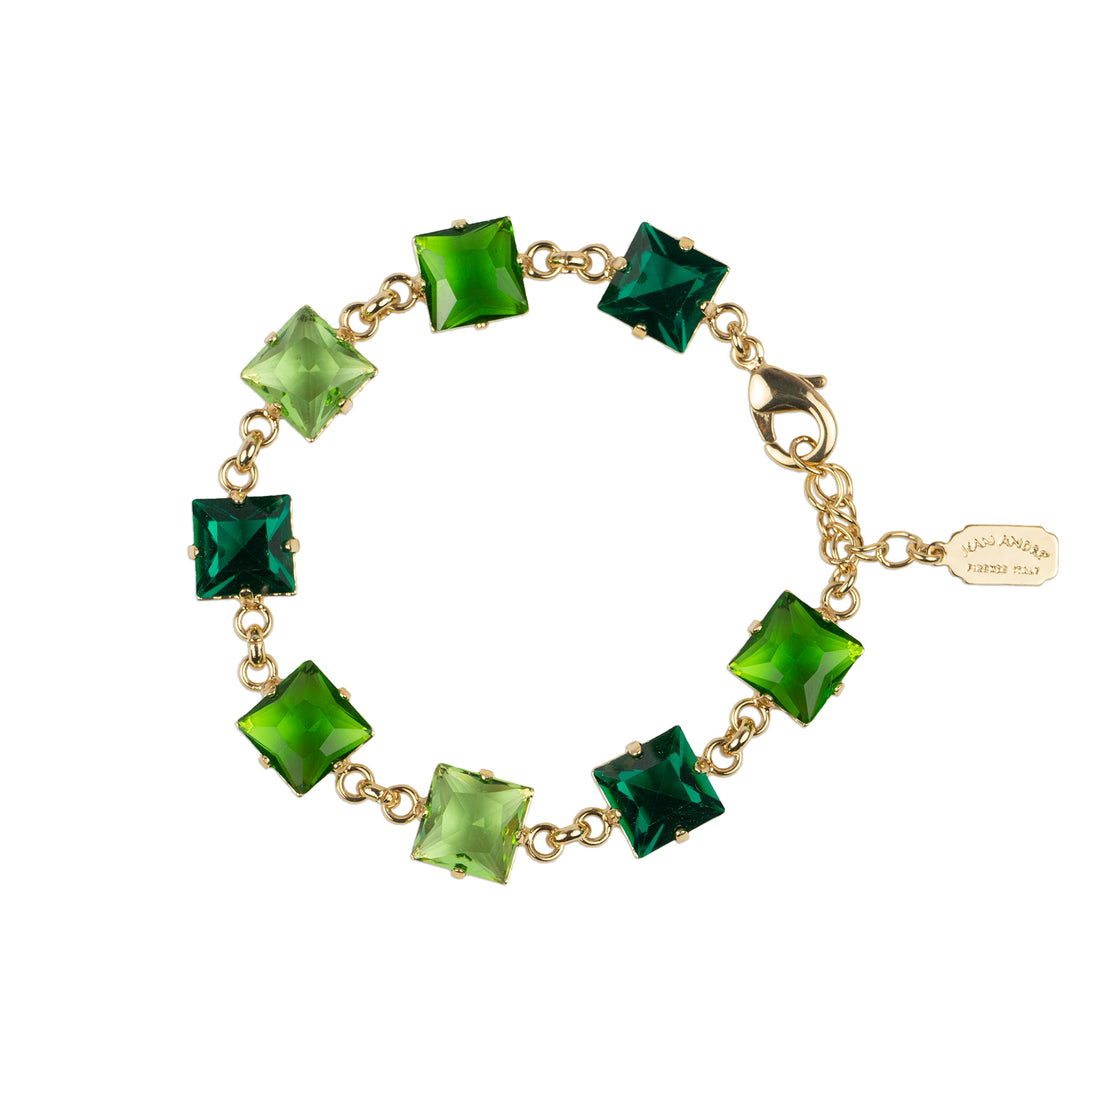 Bracelet with crystal squares